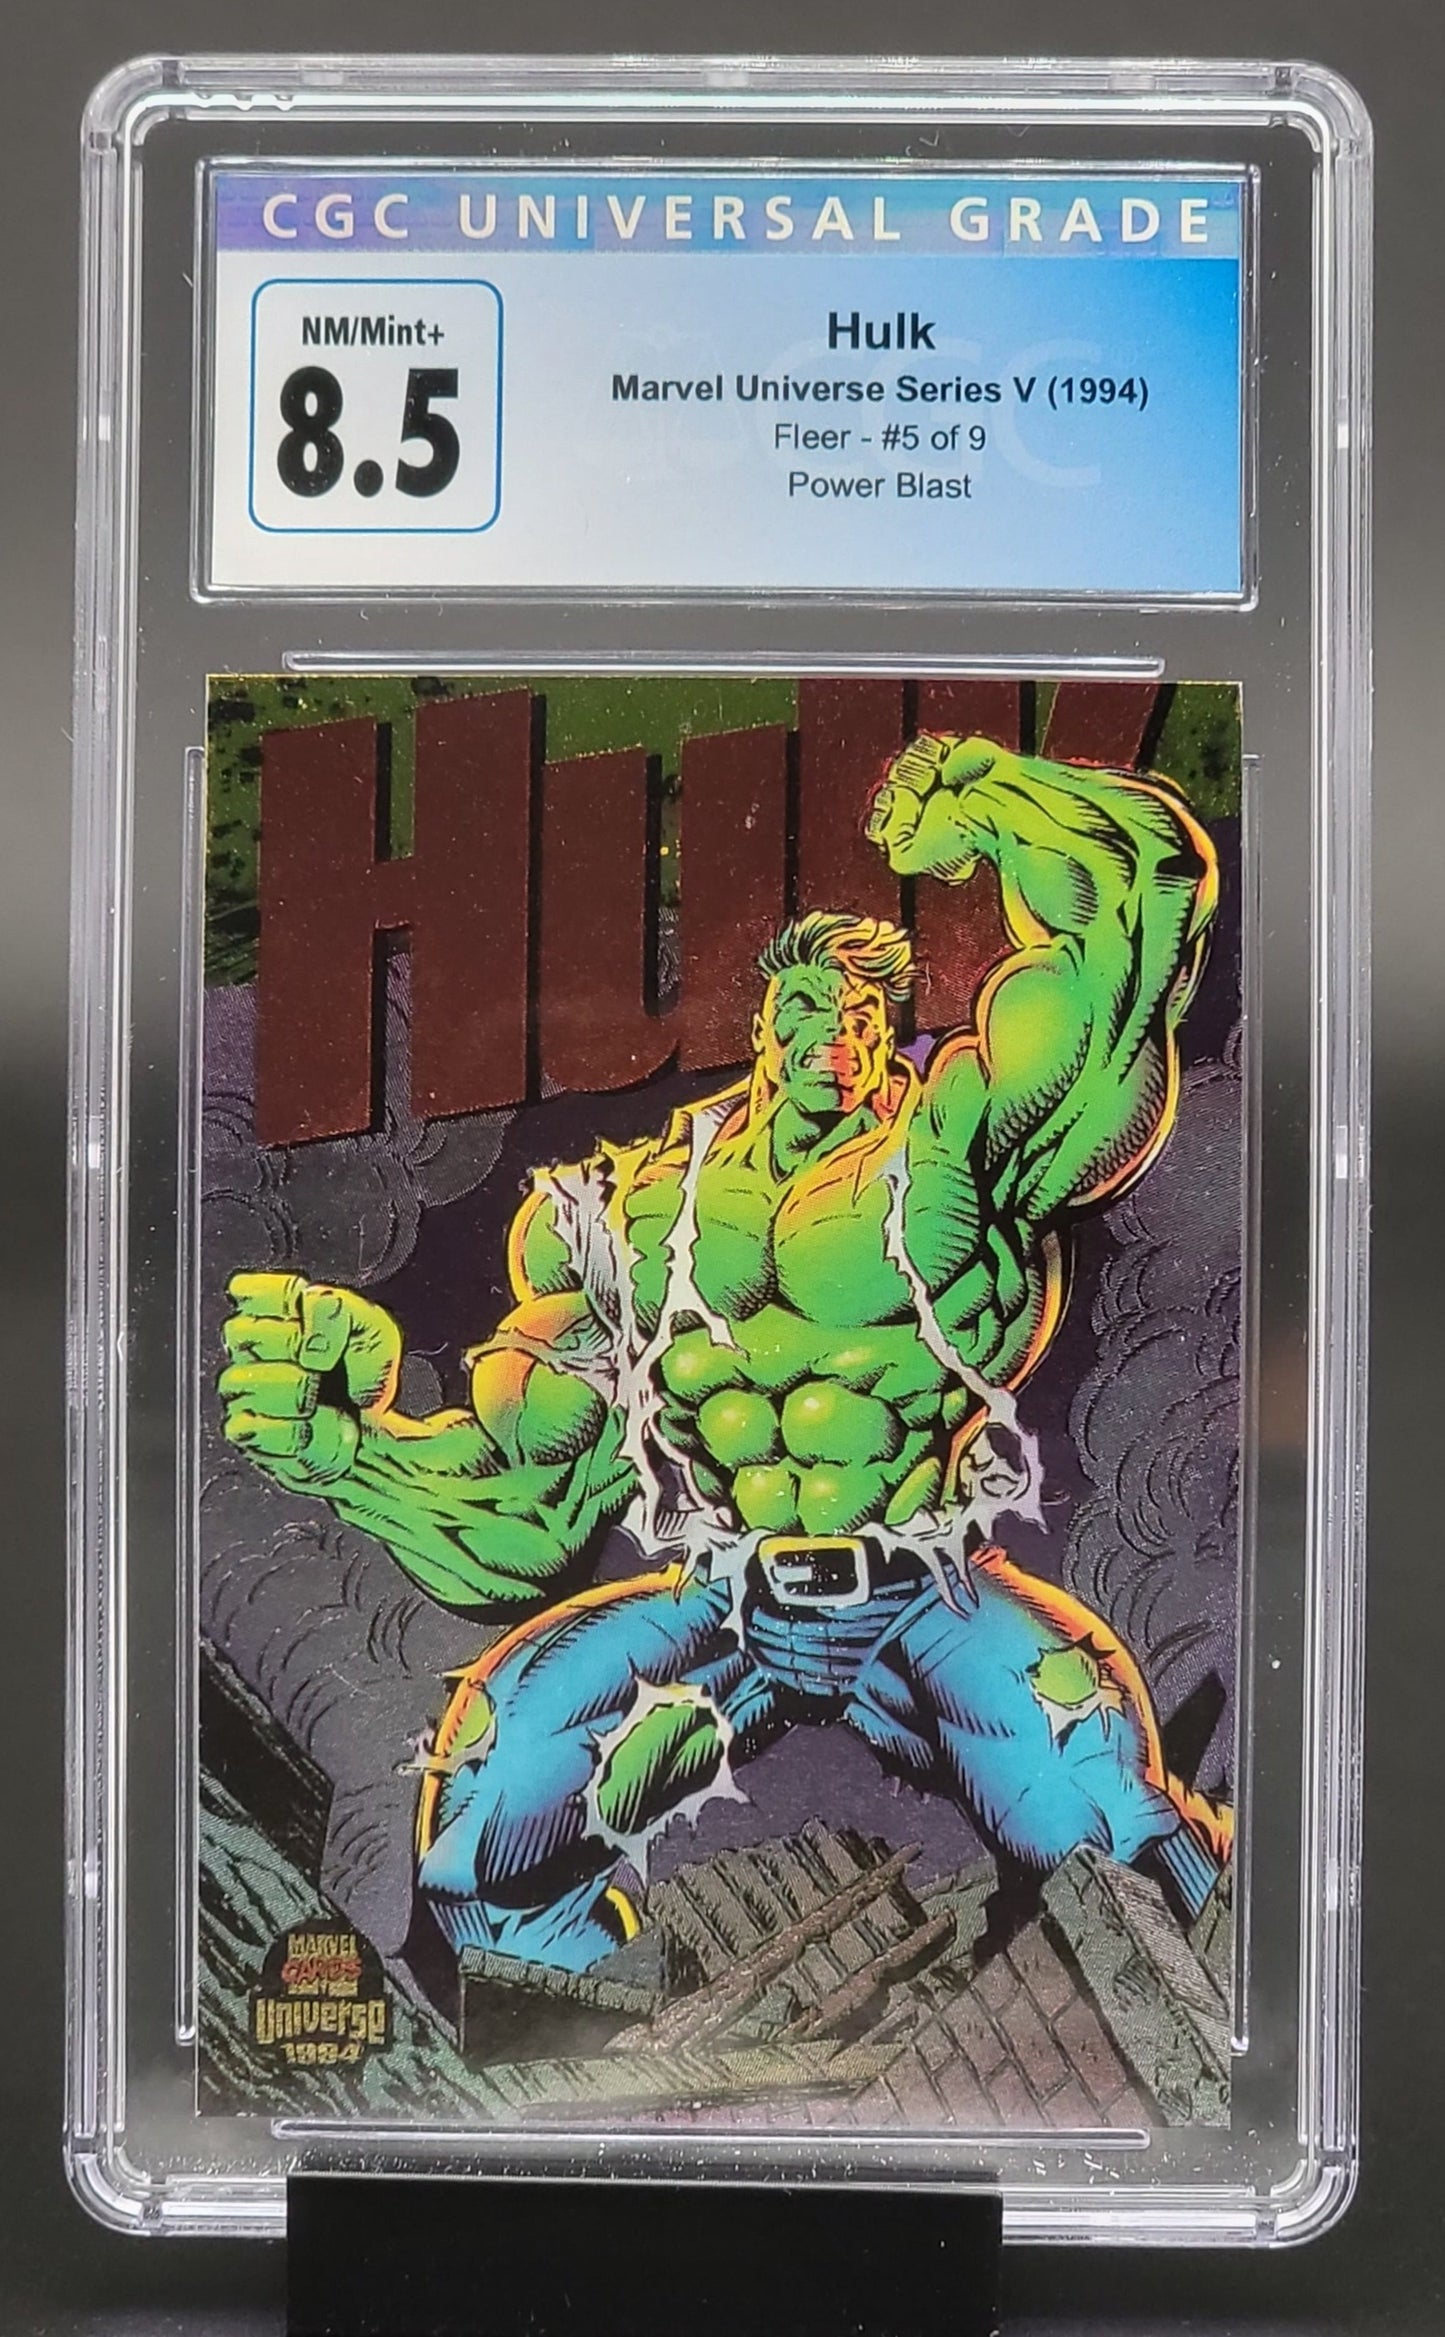 Hulk, Marvel Universe series 5 Power Blast #5 of 9 CGC 8.5